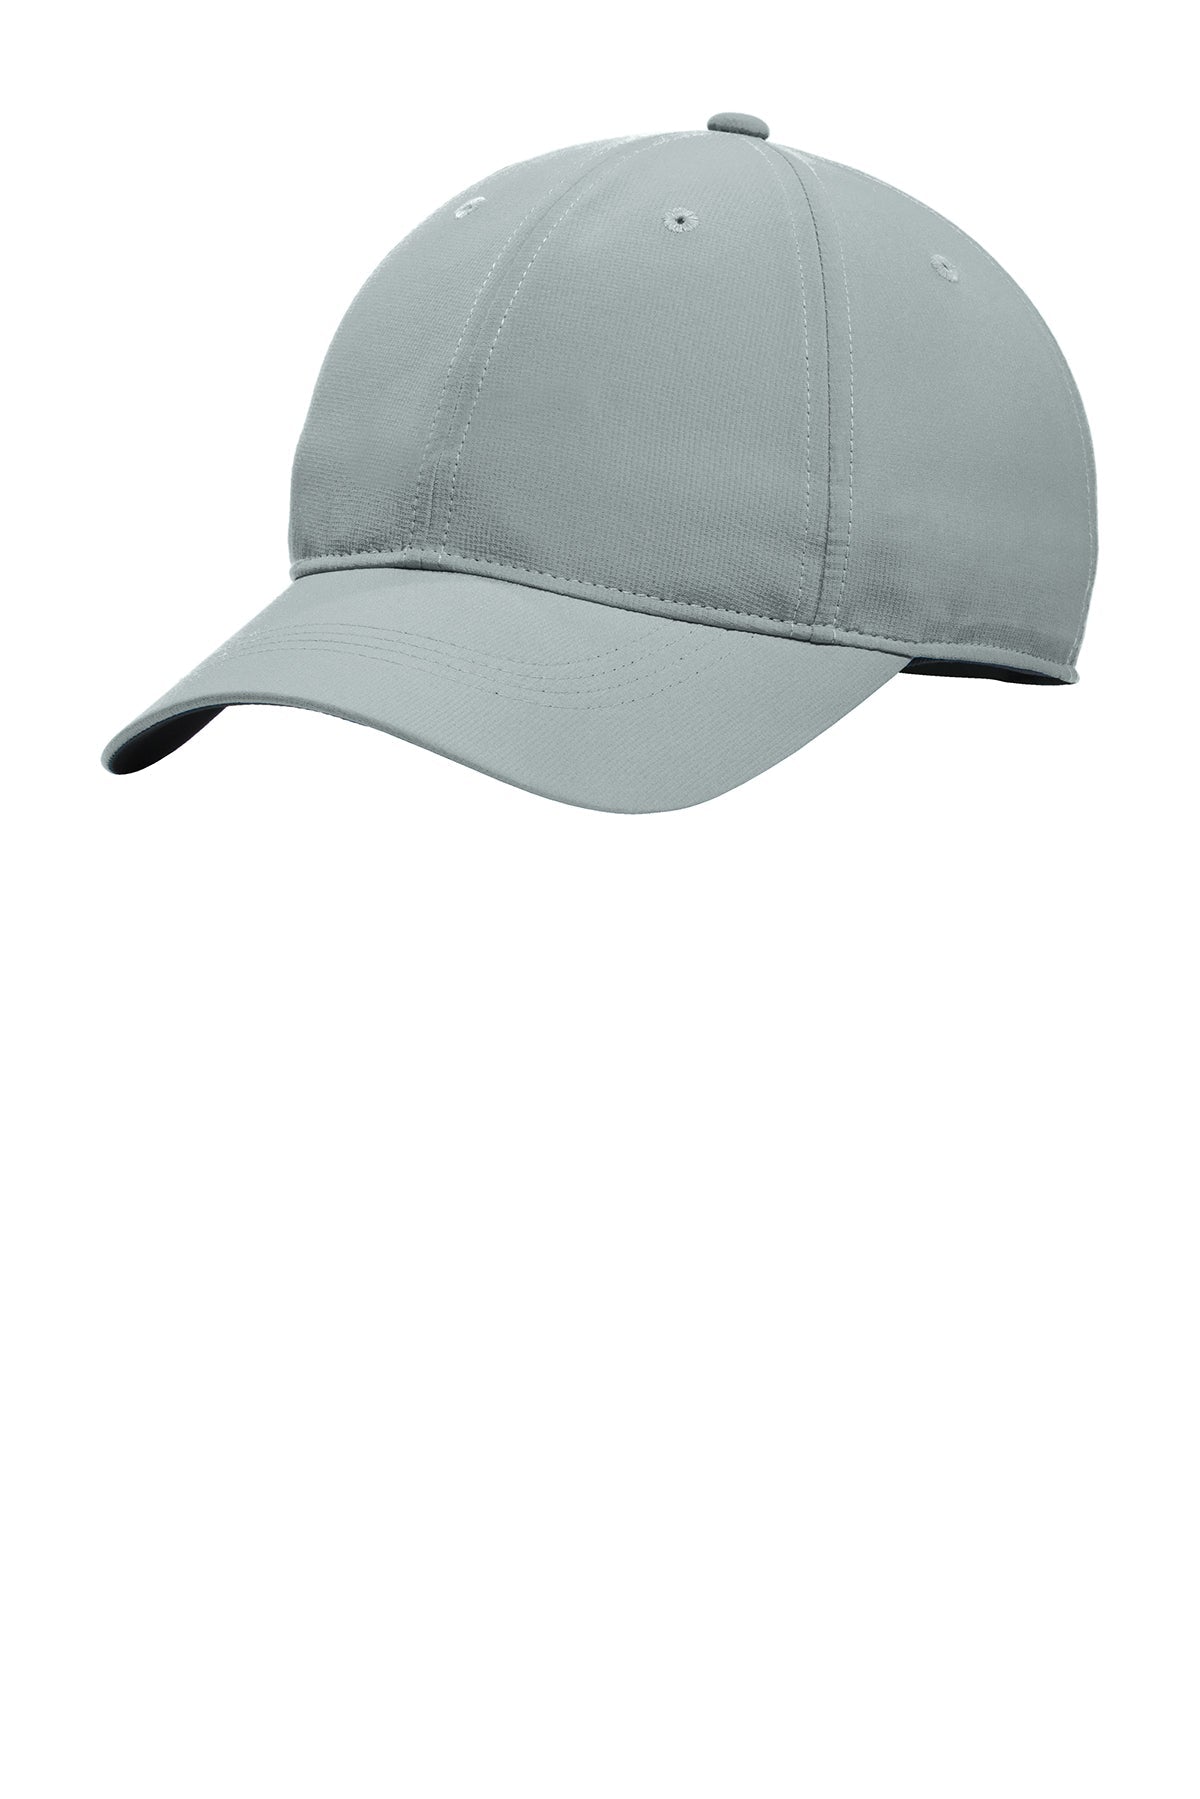 Nike Dri-FIT Tech Custom Caps, Cool Grey